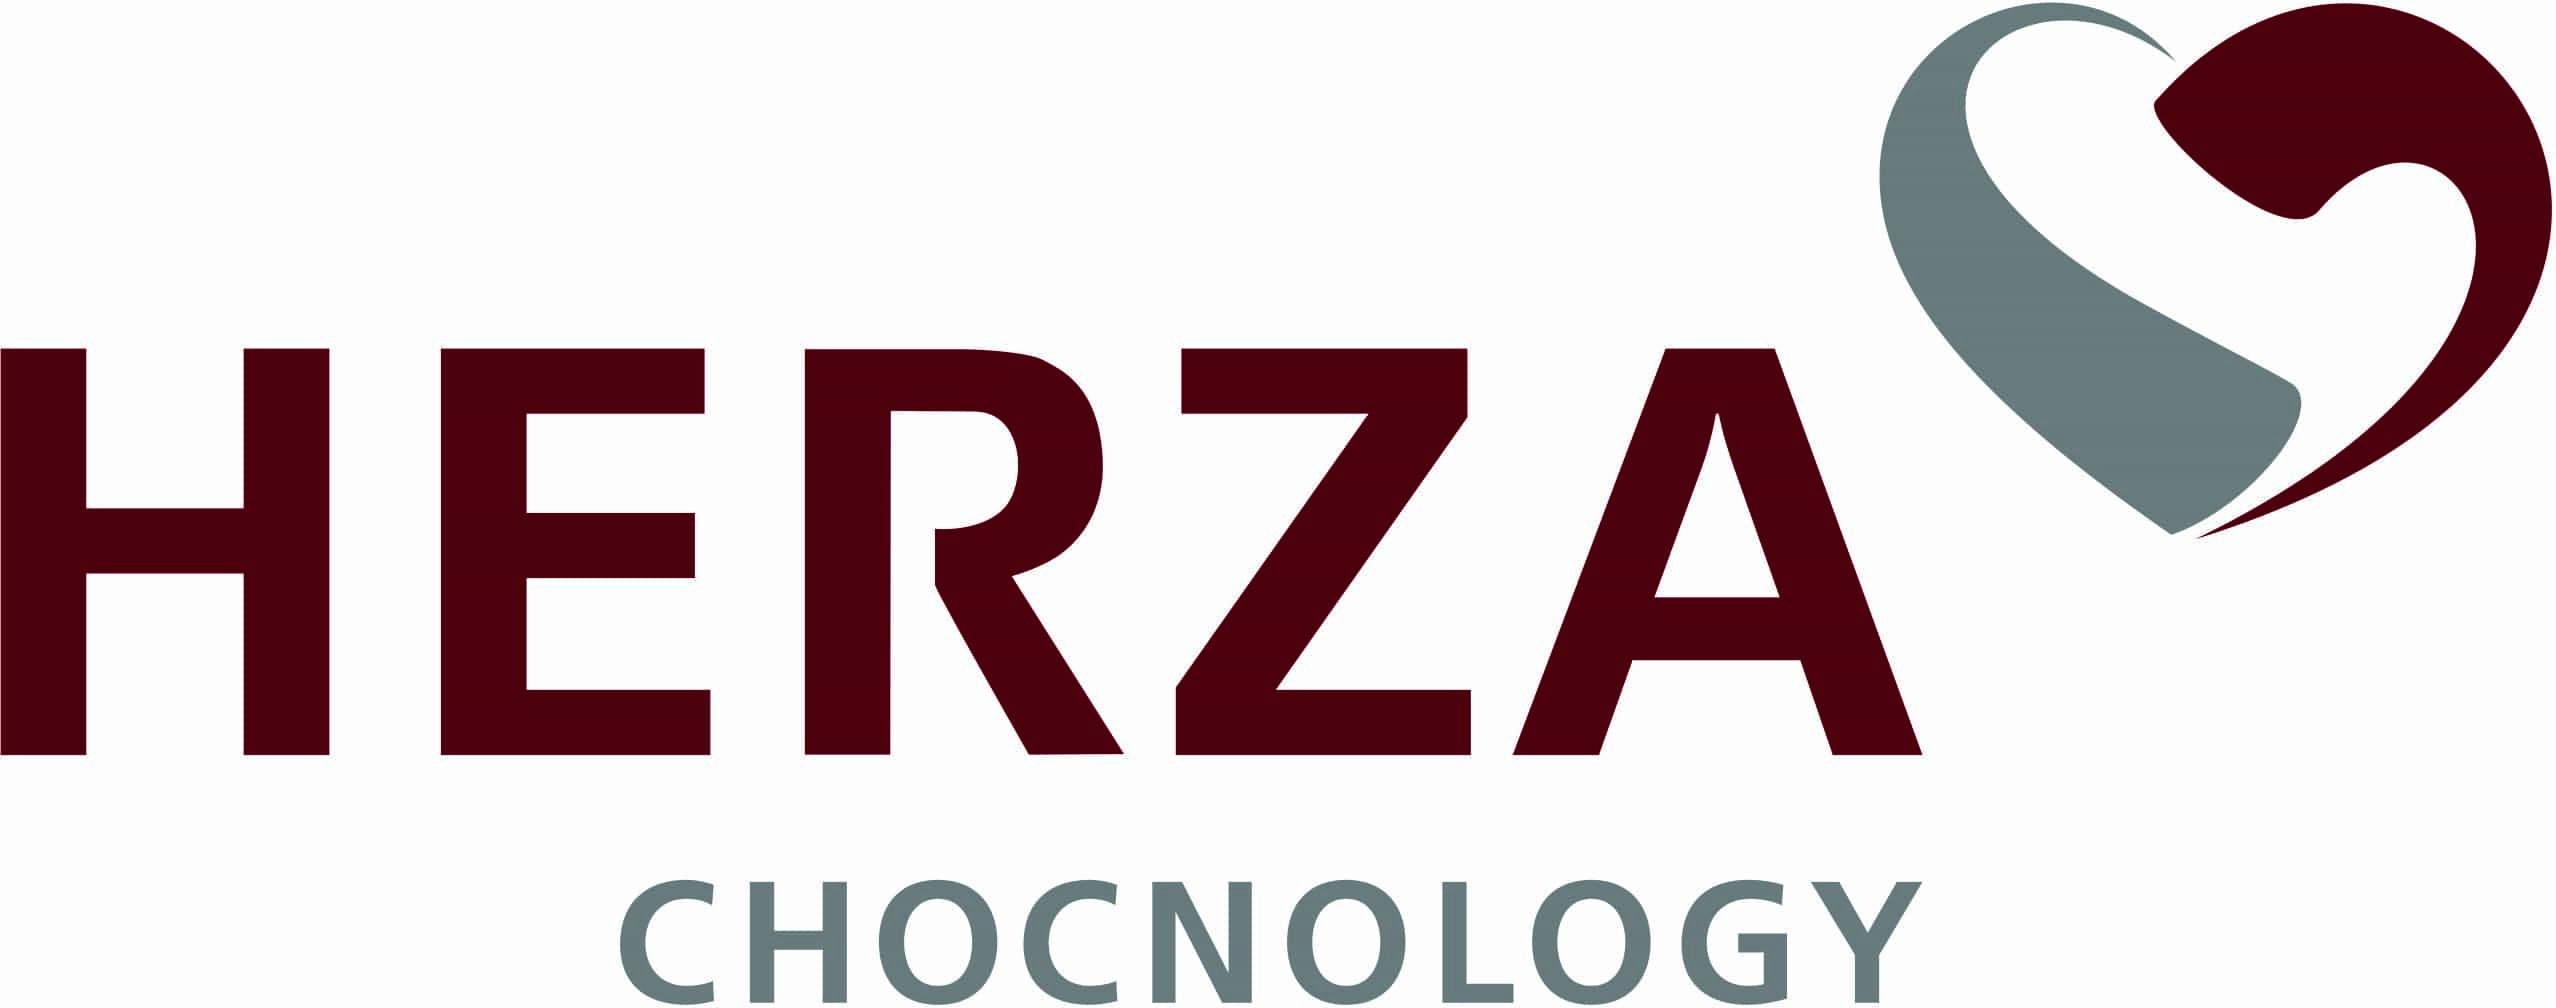 Herza logo Print CMYK 4c 